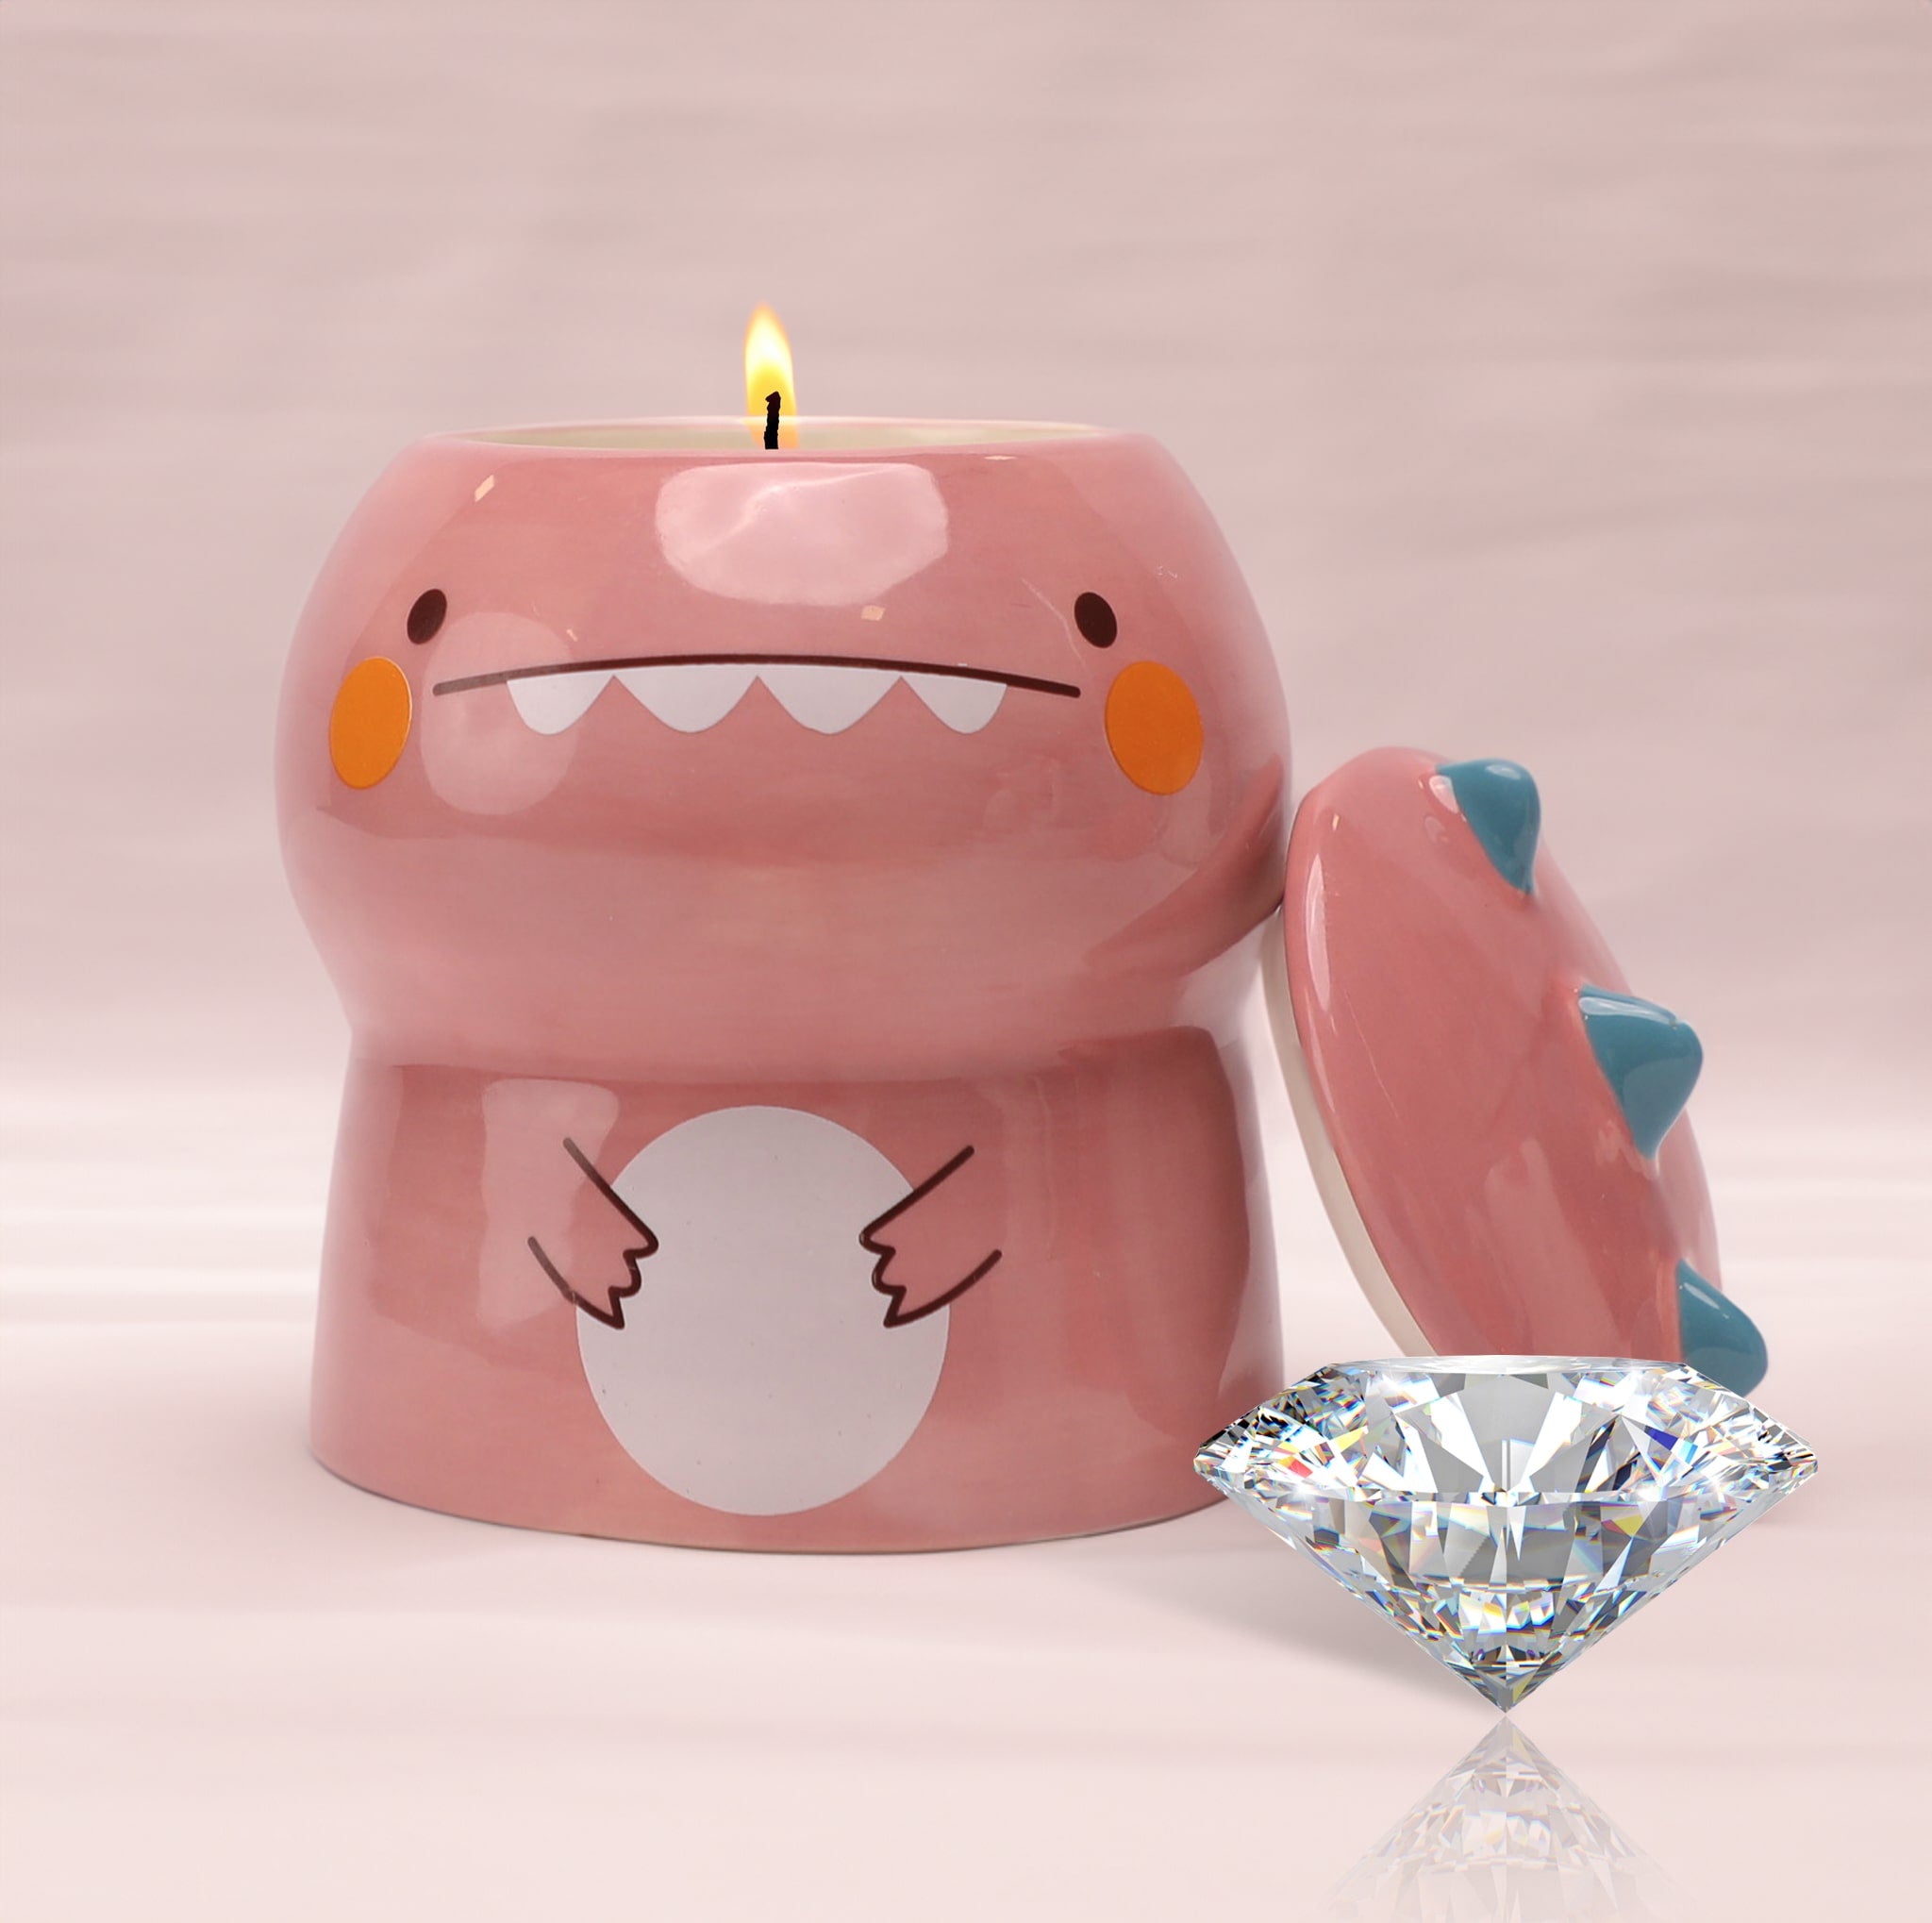 Cuddle-Saurus Mug Diamond Candle